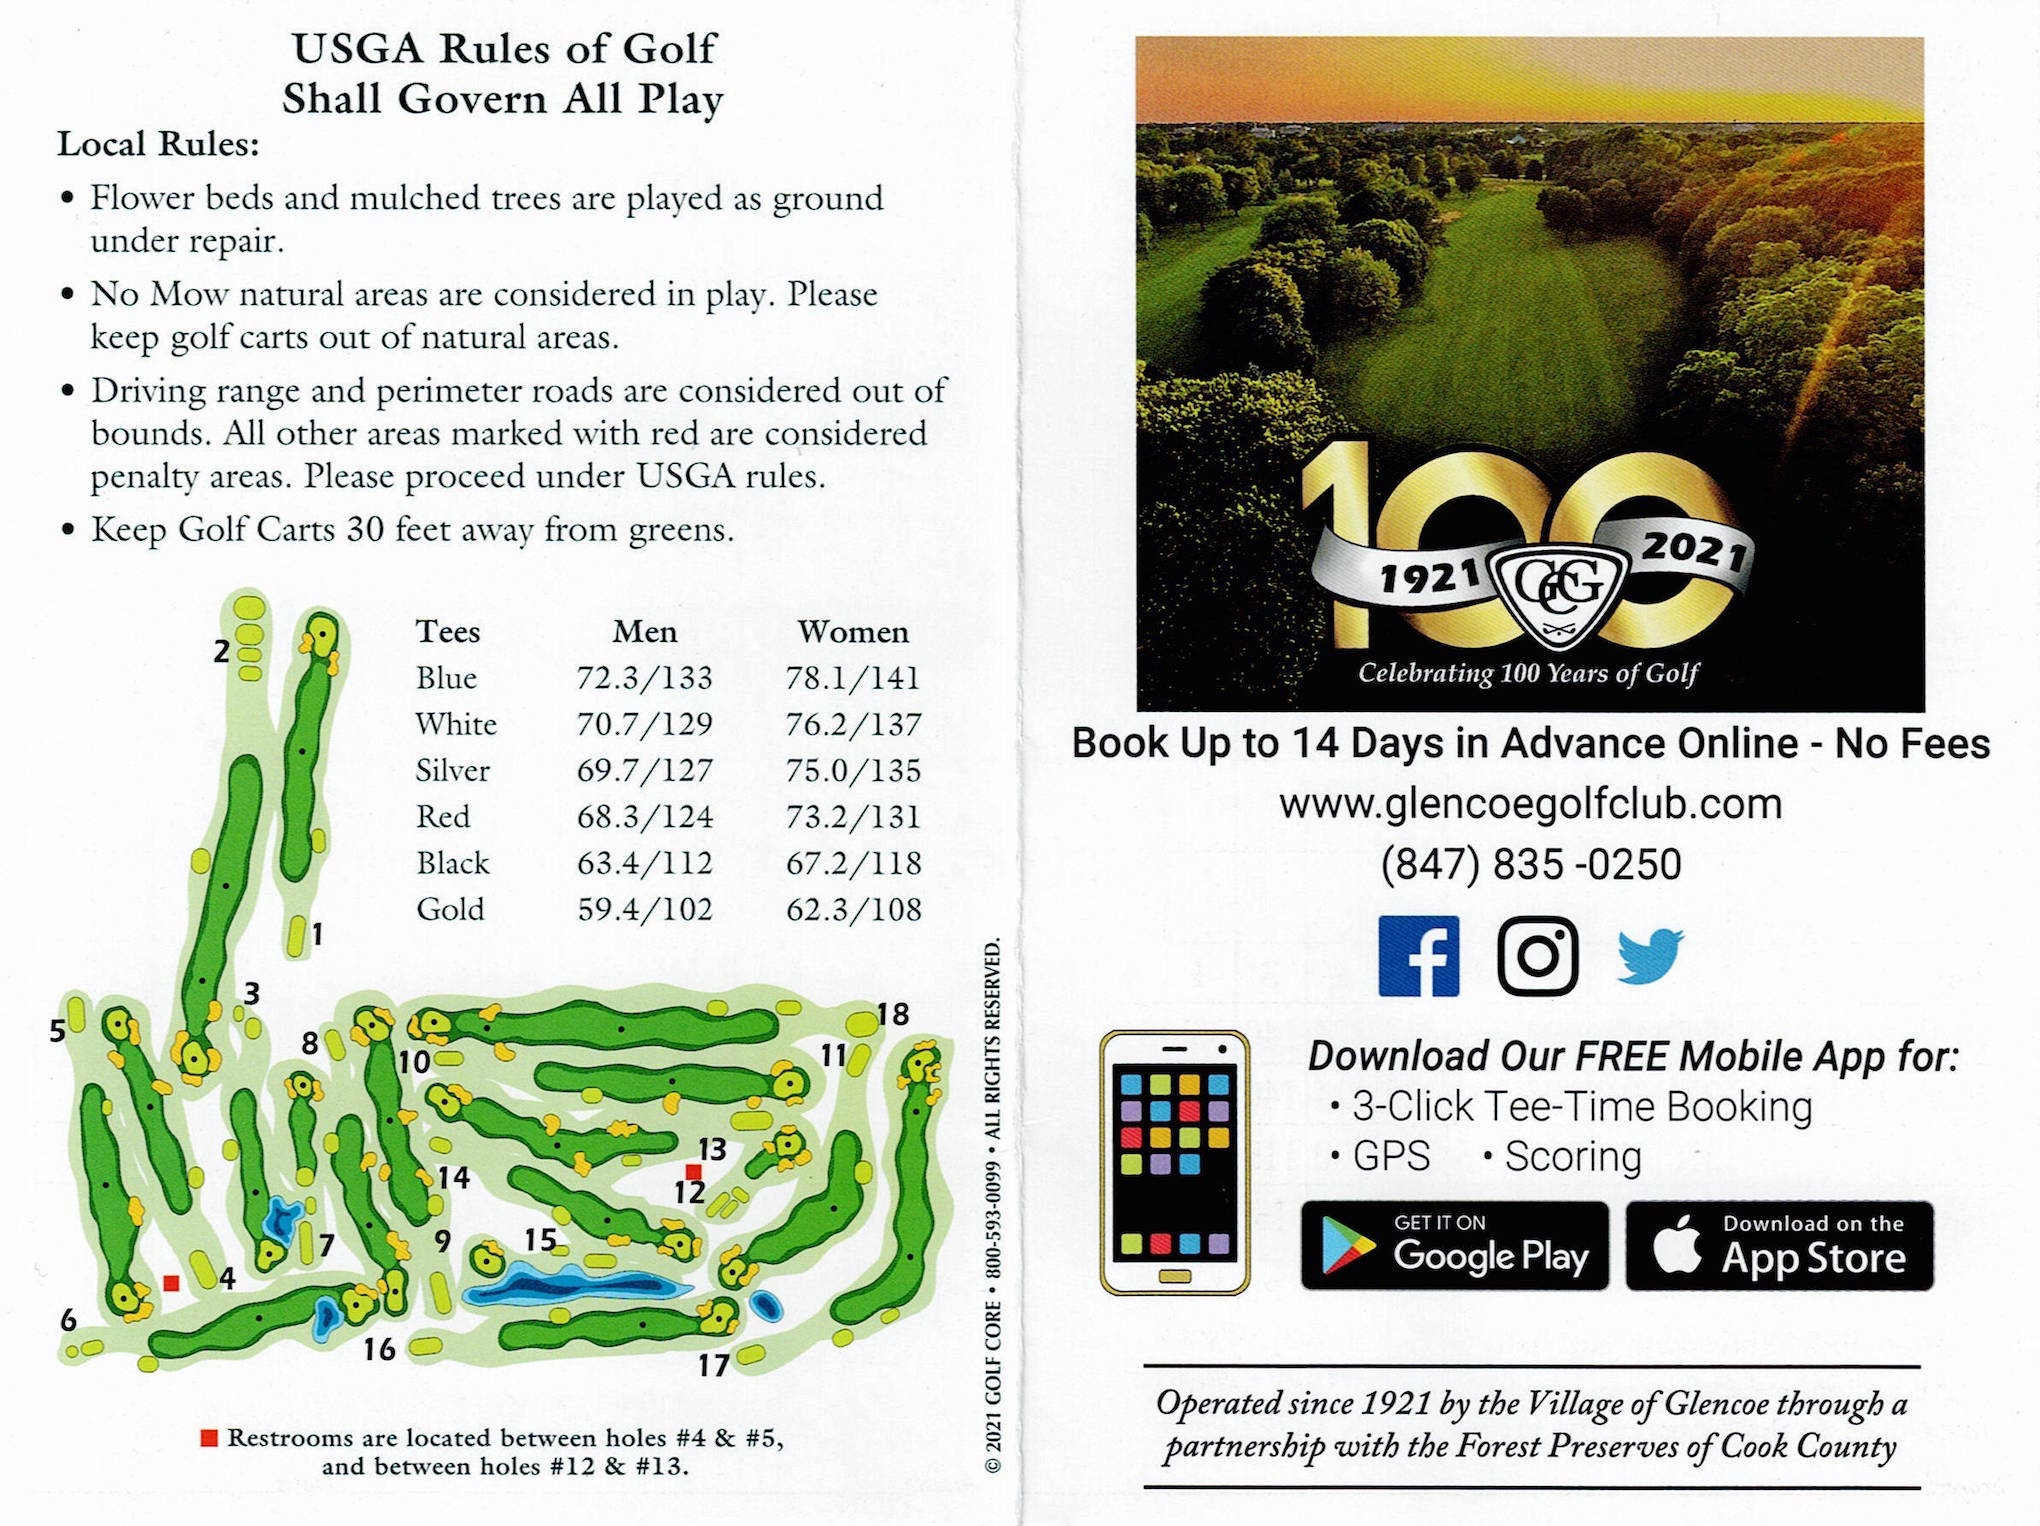 Scan of the scorecard from Glencoe Golf Club in Glencoe, Illinois. 